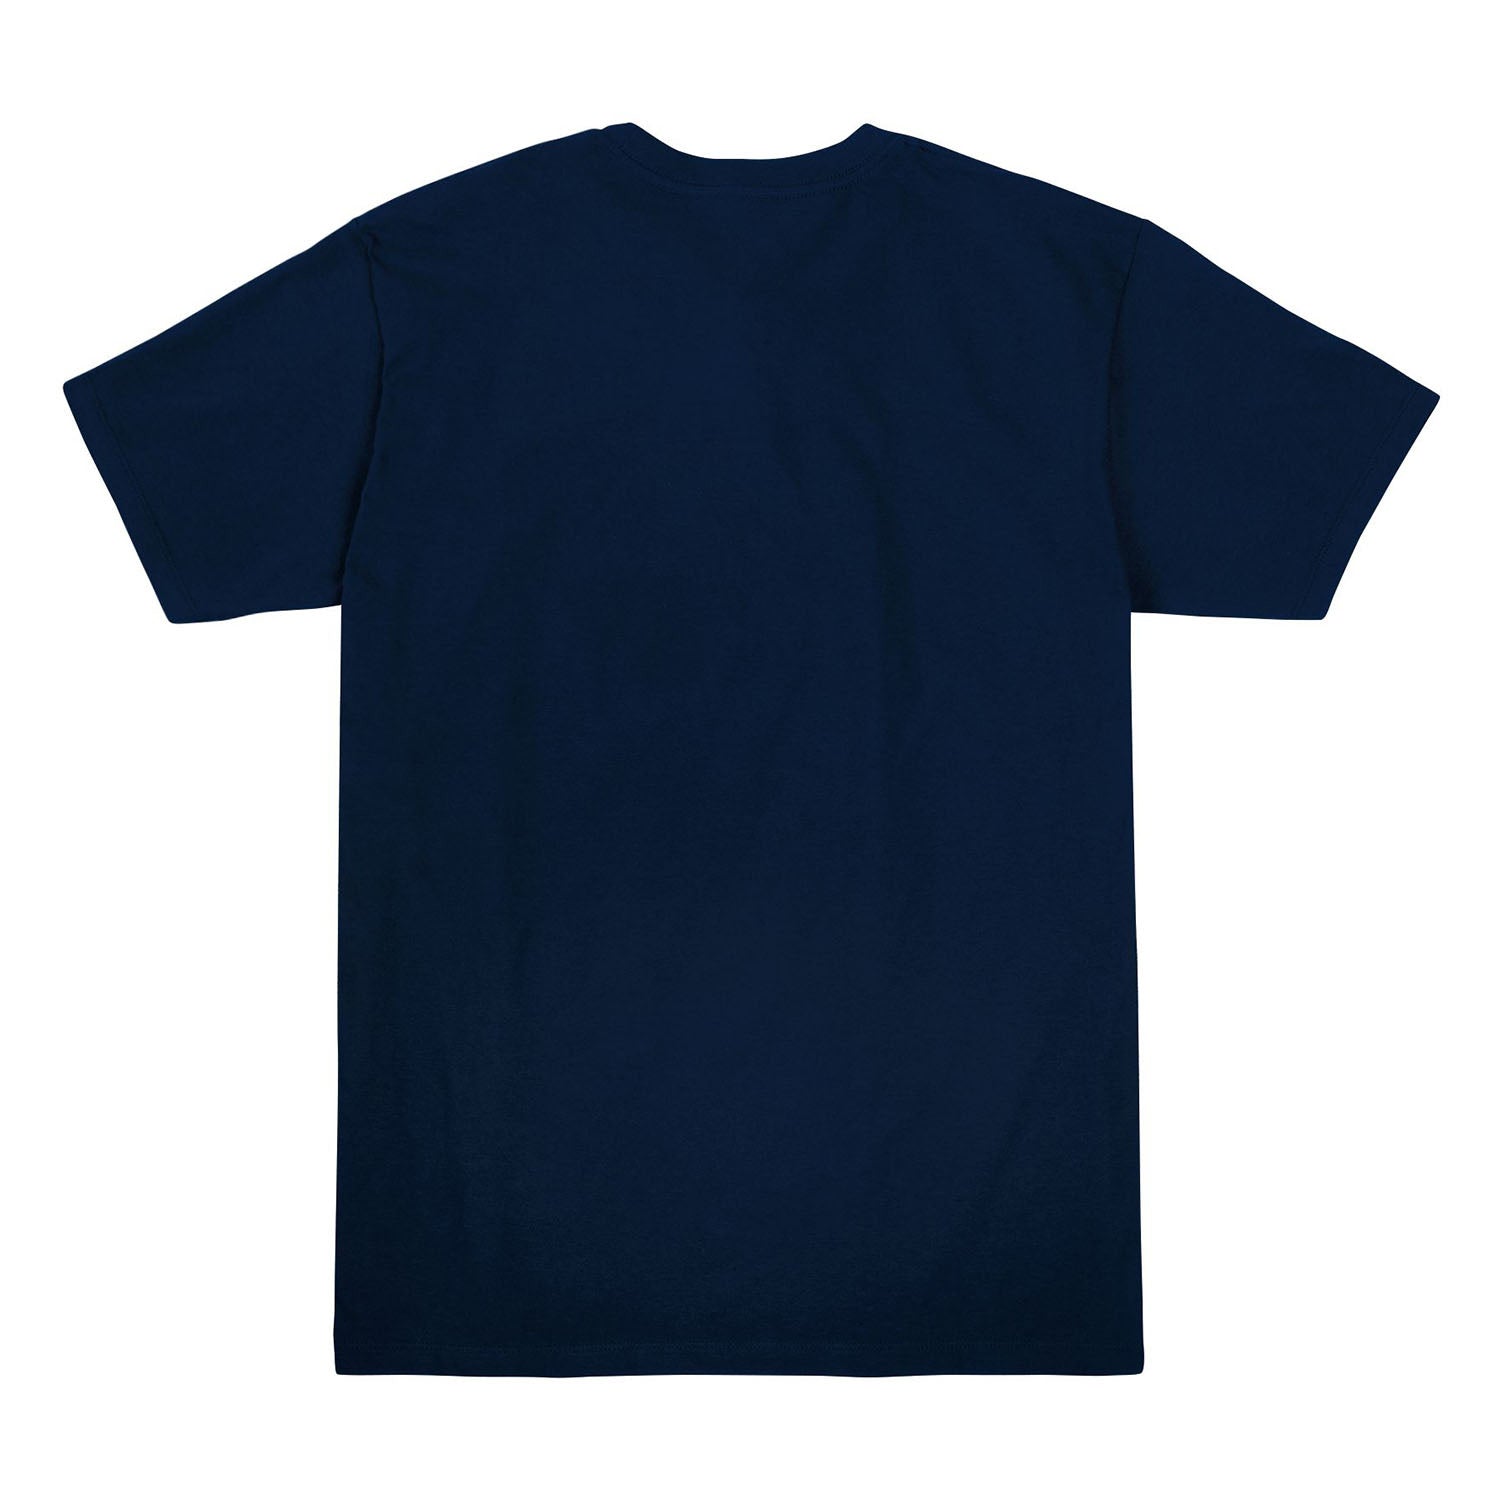 Seattle Surge Retro Blue T-Shirt